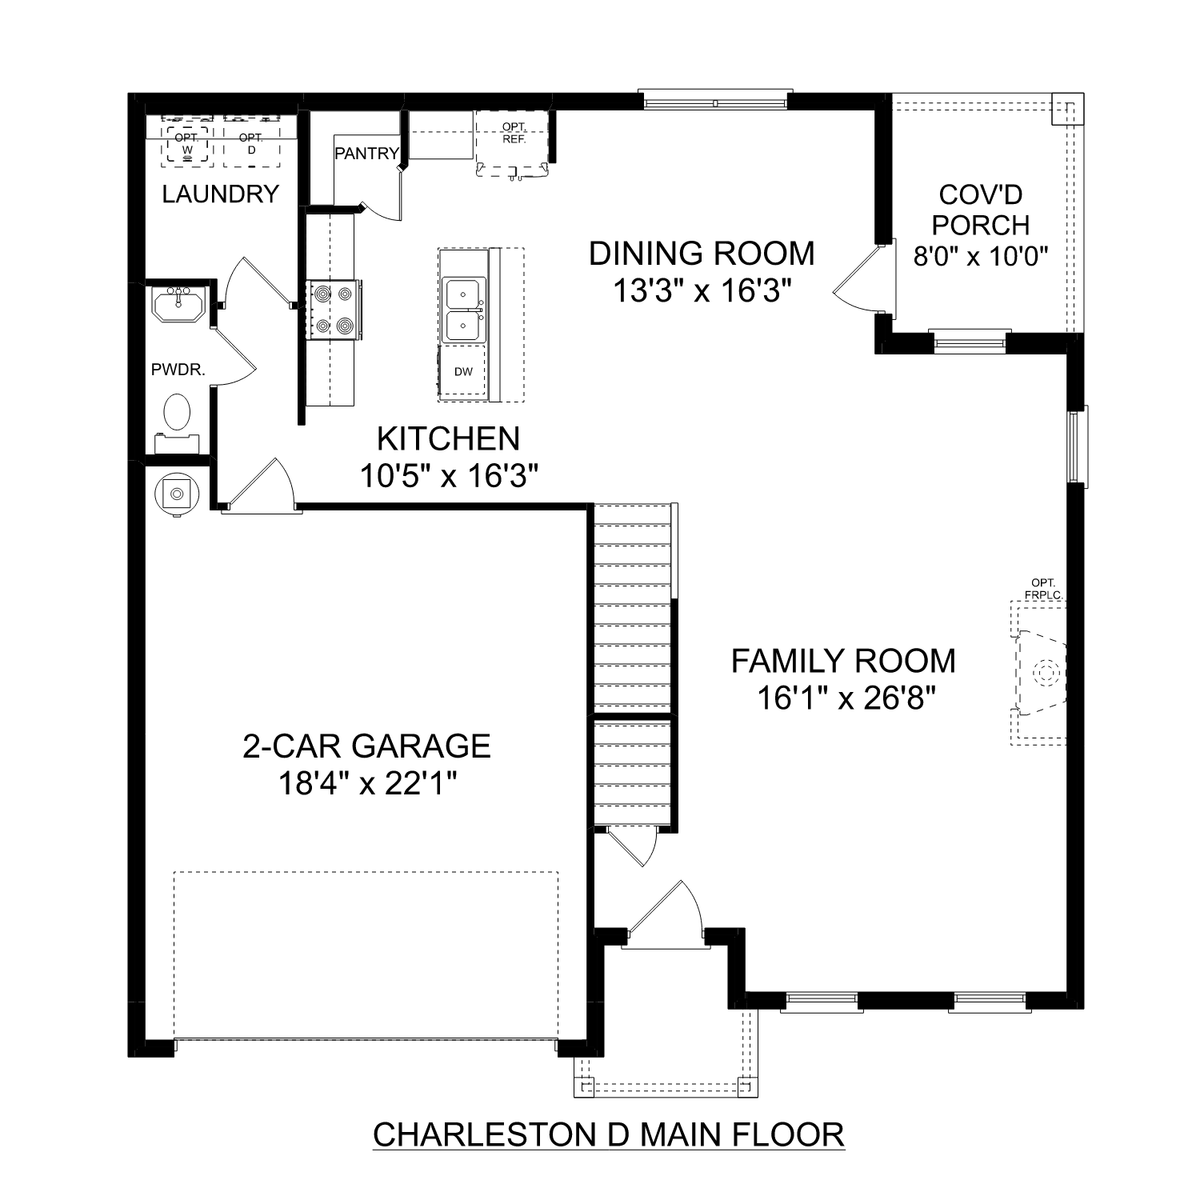 1 - The Charleston D floor plan layout for 2158 Dawson Lane NE in Davidson Homes' The Reserve at North Ridge community.